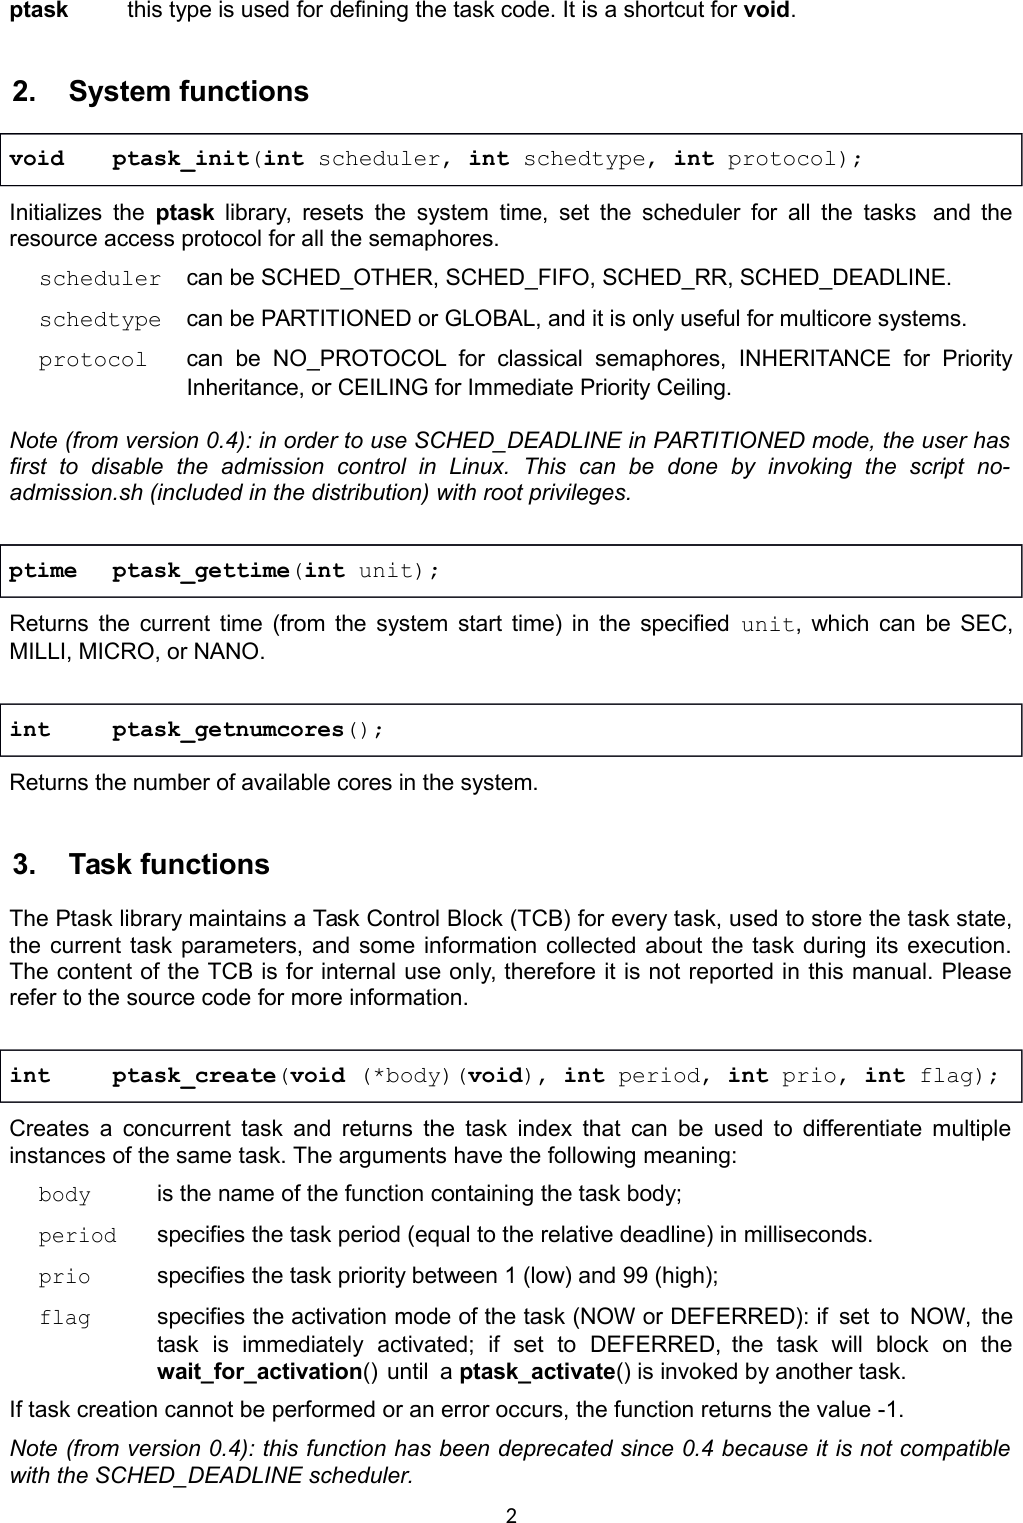 Page 2 of 10 - Ptask Manual 0.4